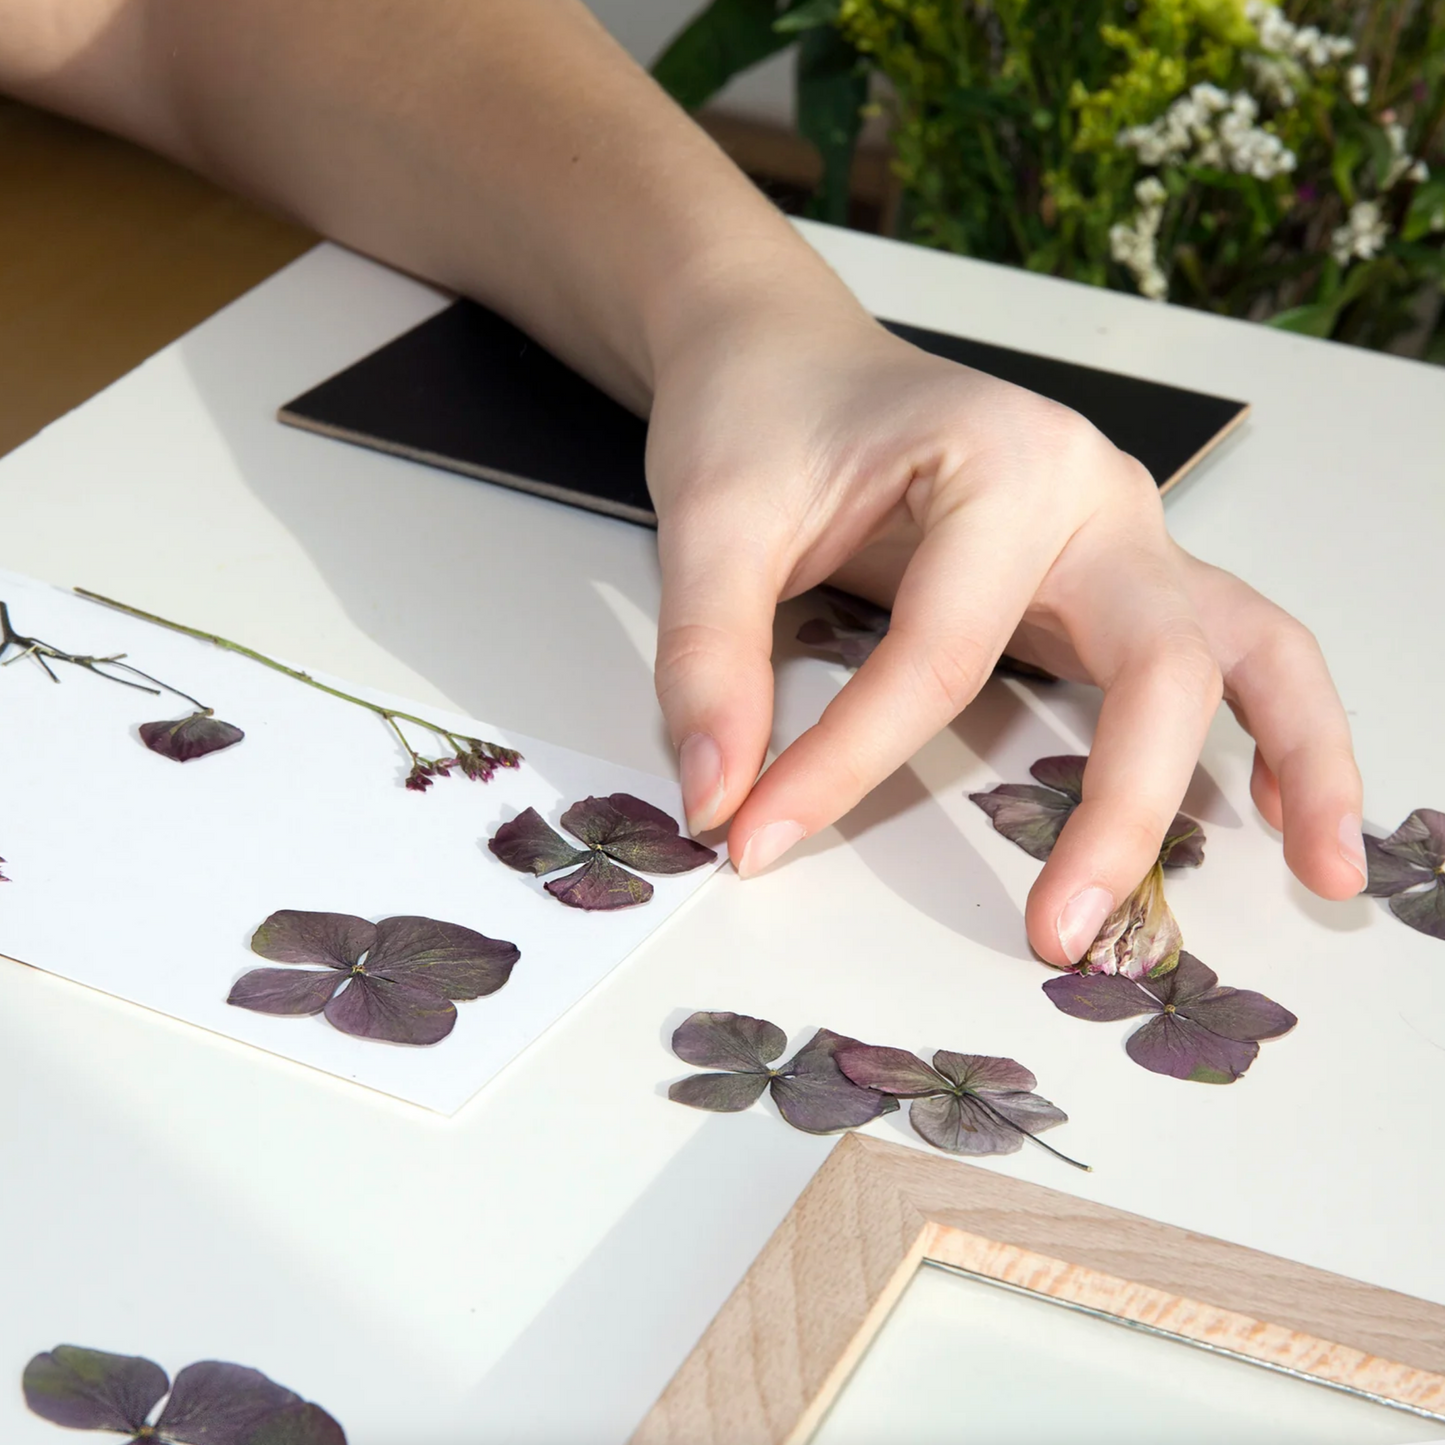 Make Your Own Pressed Flower Frame Art